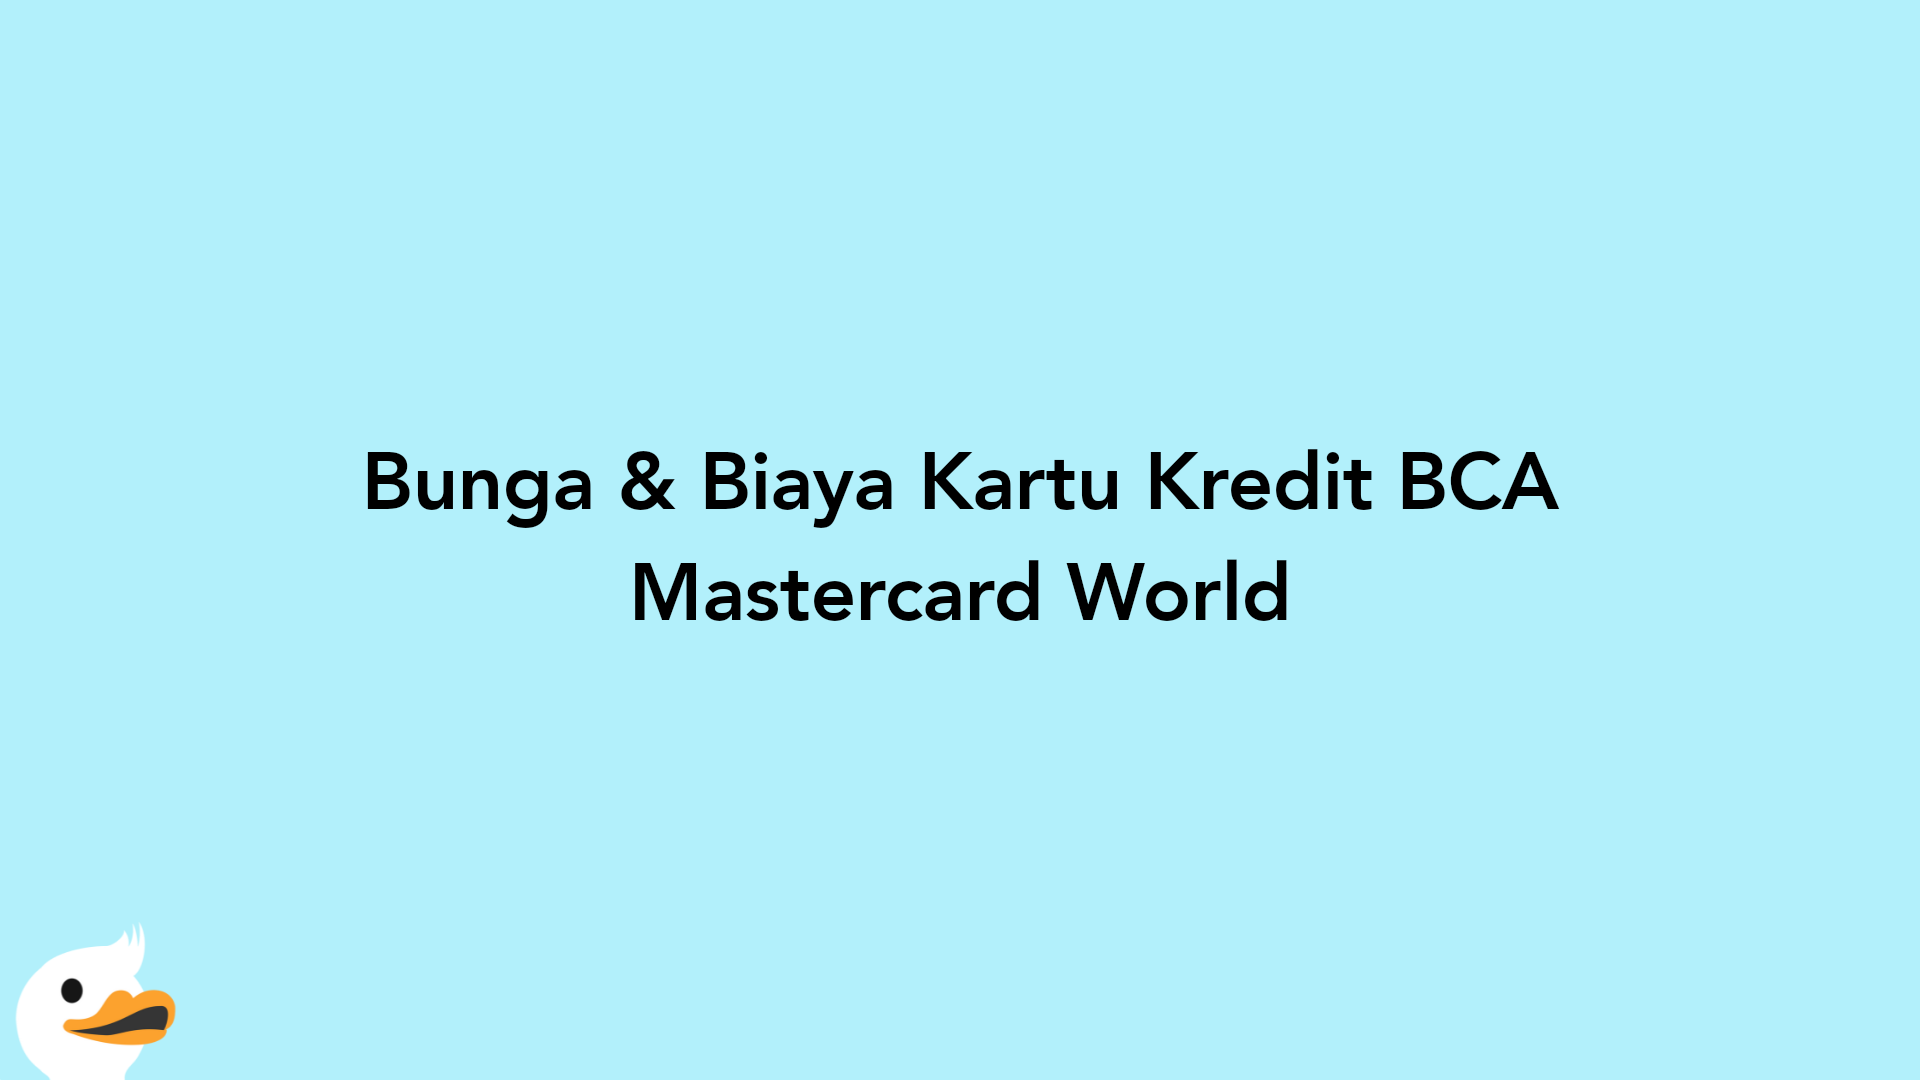 Bunga & Biaya Kartu Kredit BCA Mastercard World